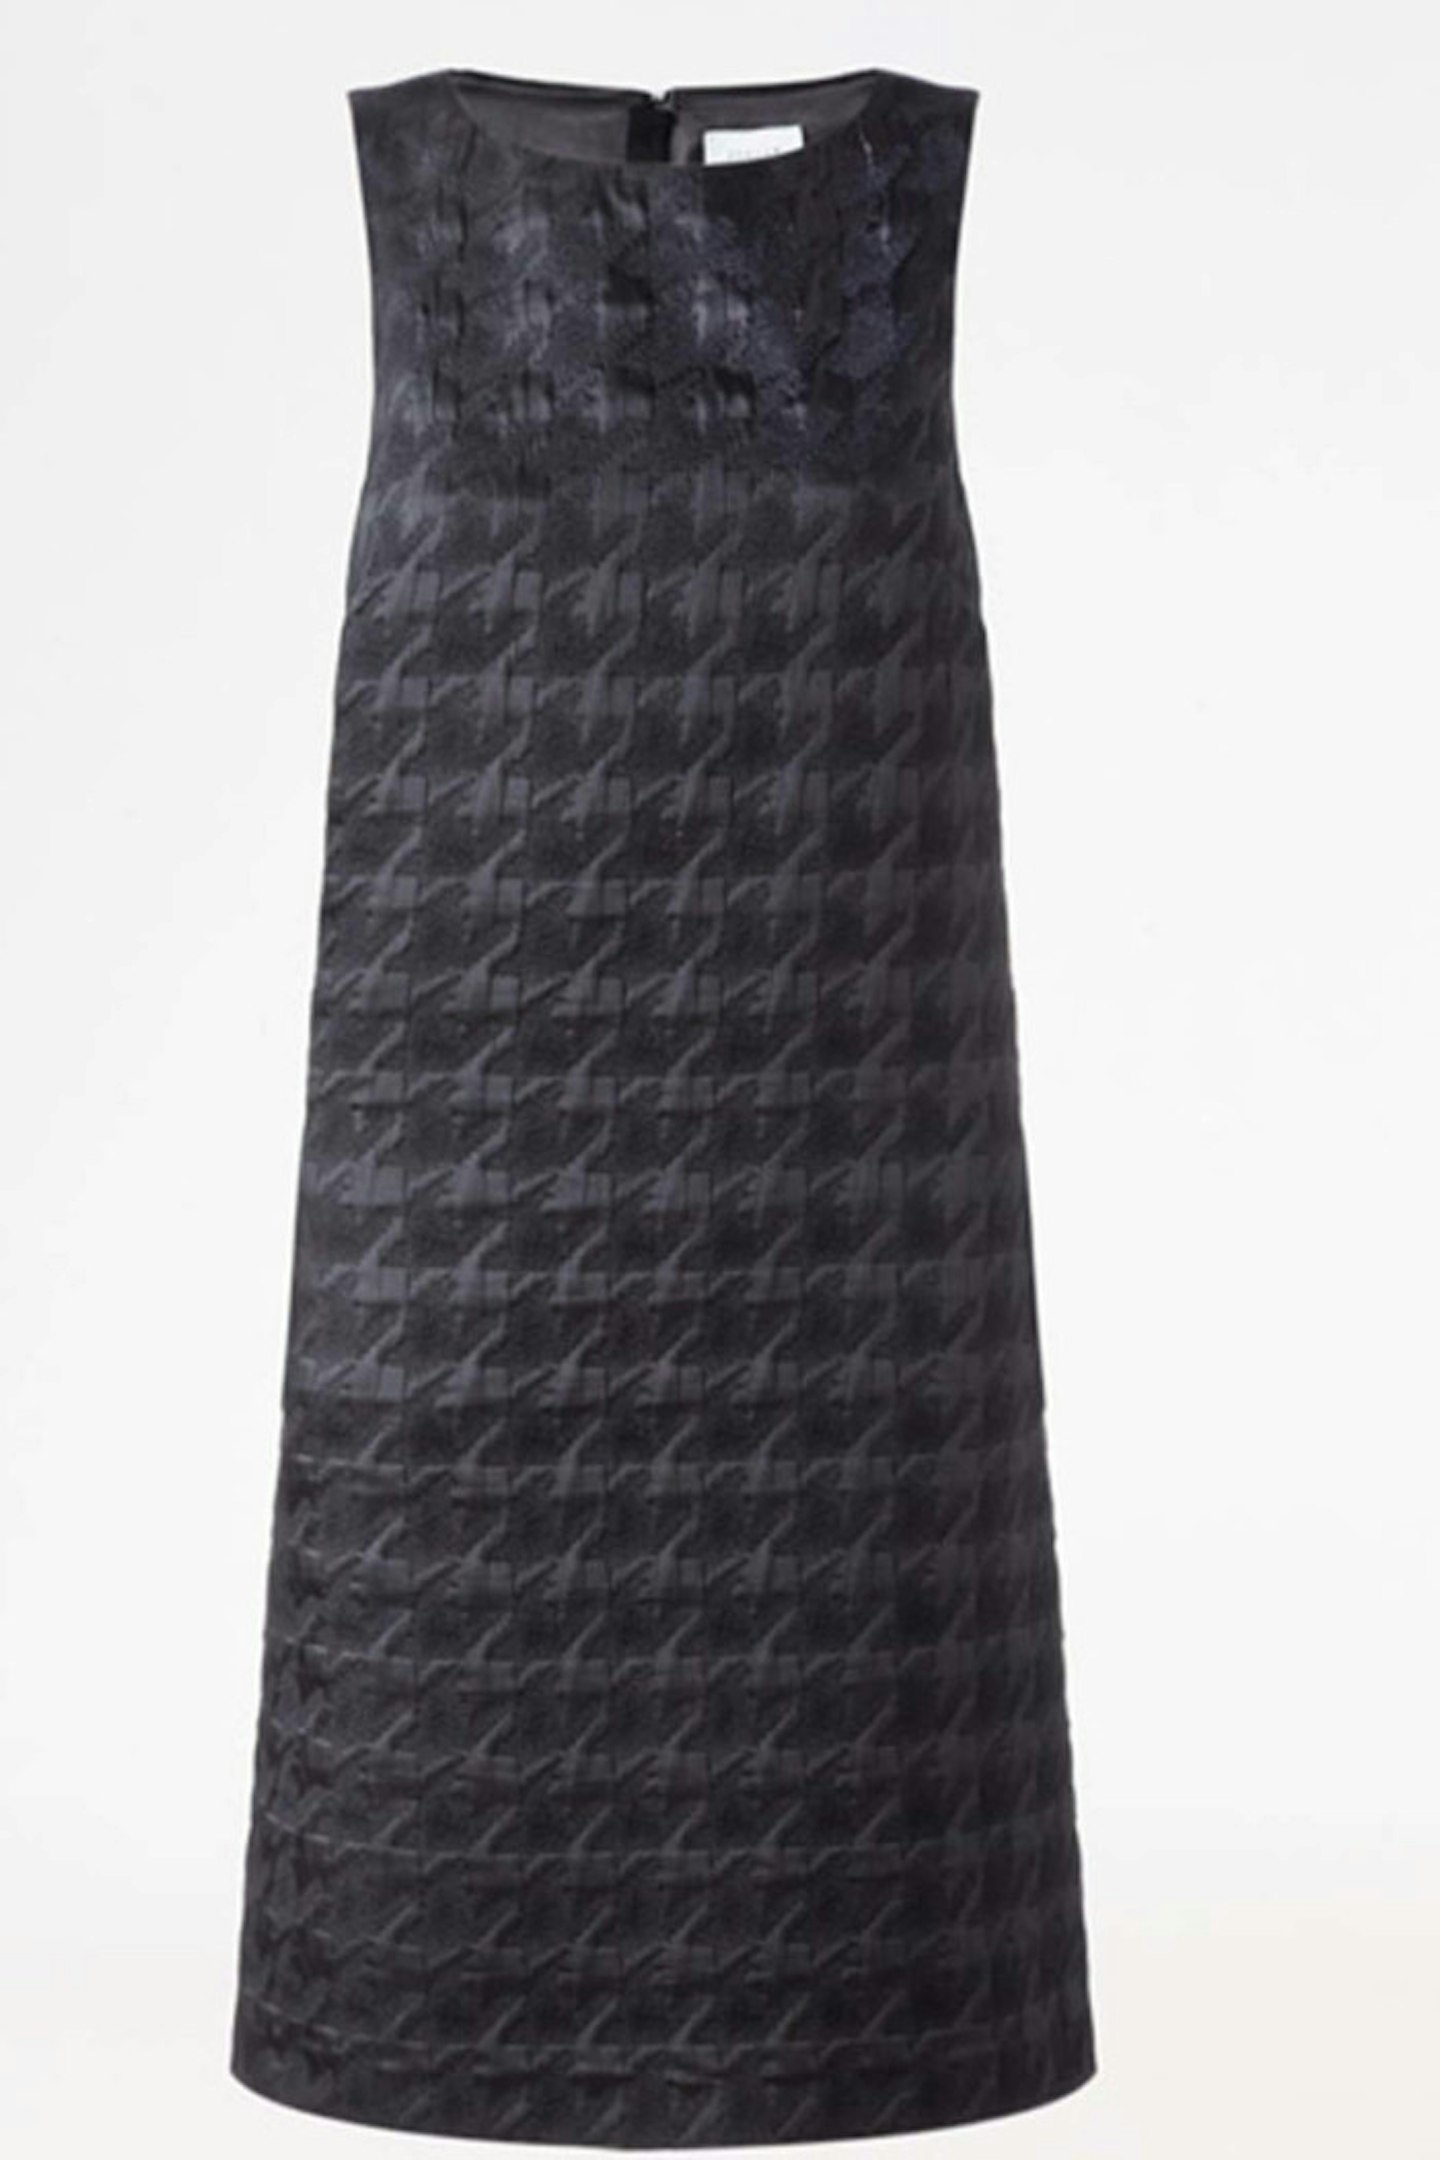 45. Dogtooth A-Line Dress, £129, Jigsaw